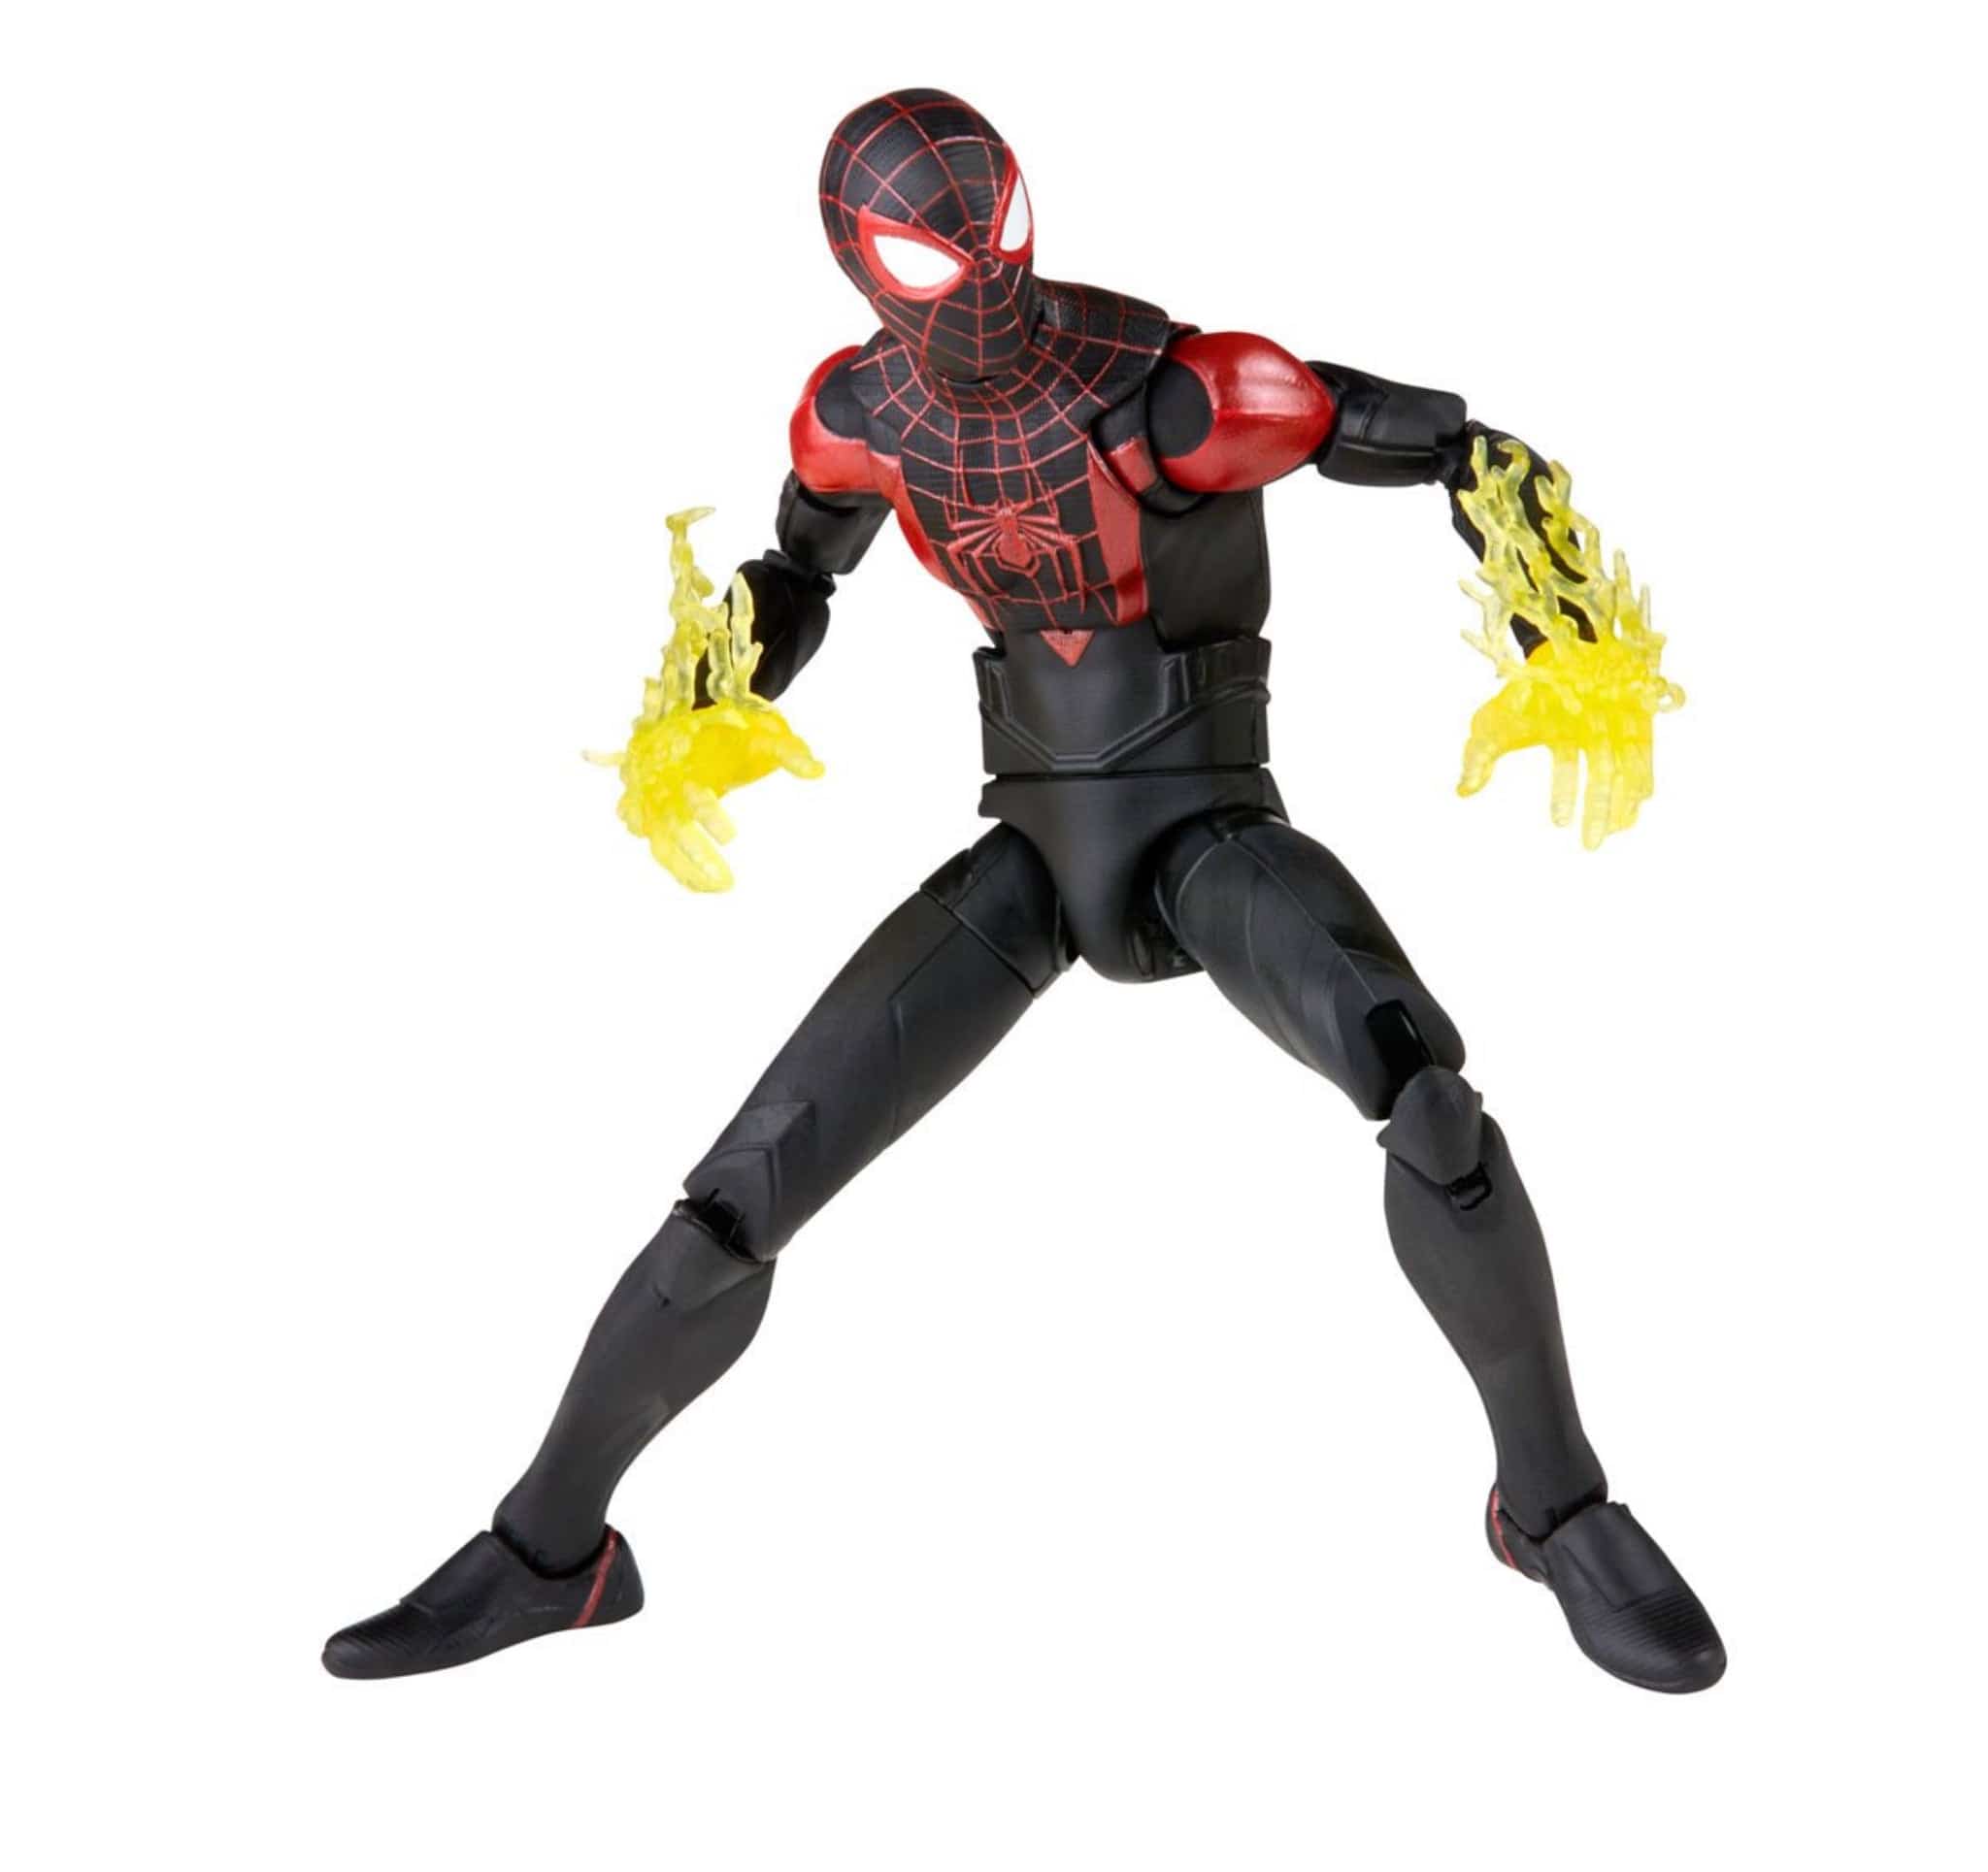 Spider-Man 3 Marvel Legends Miles Morales 6-Inch Action Figure bio electricity 